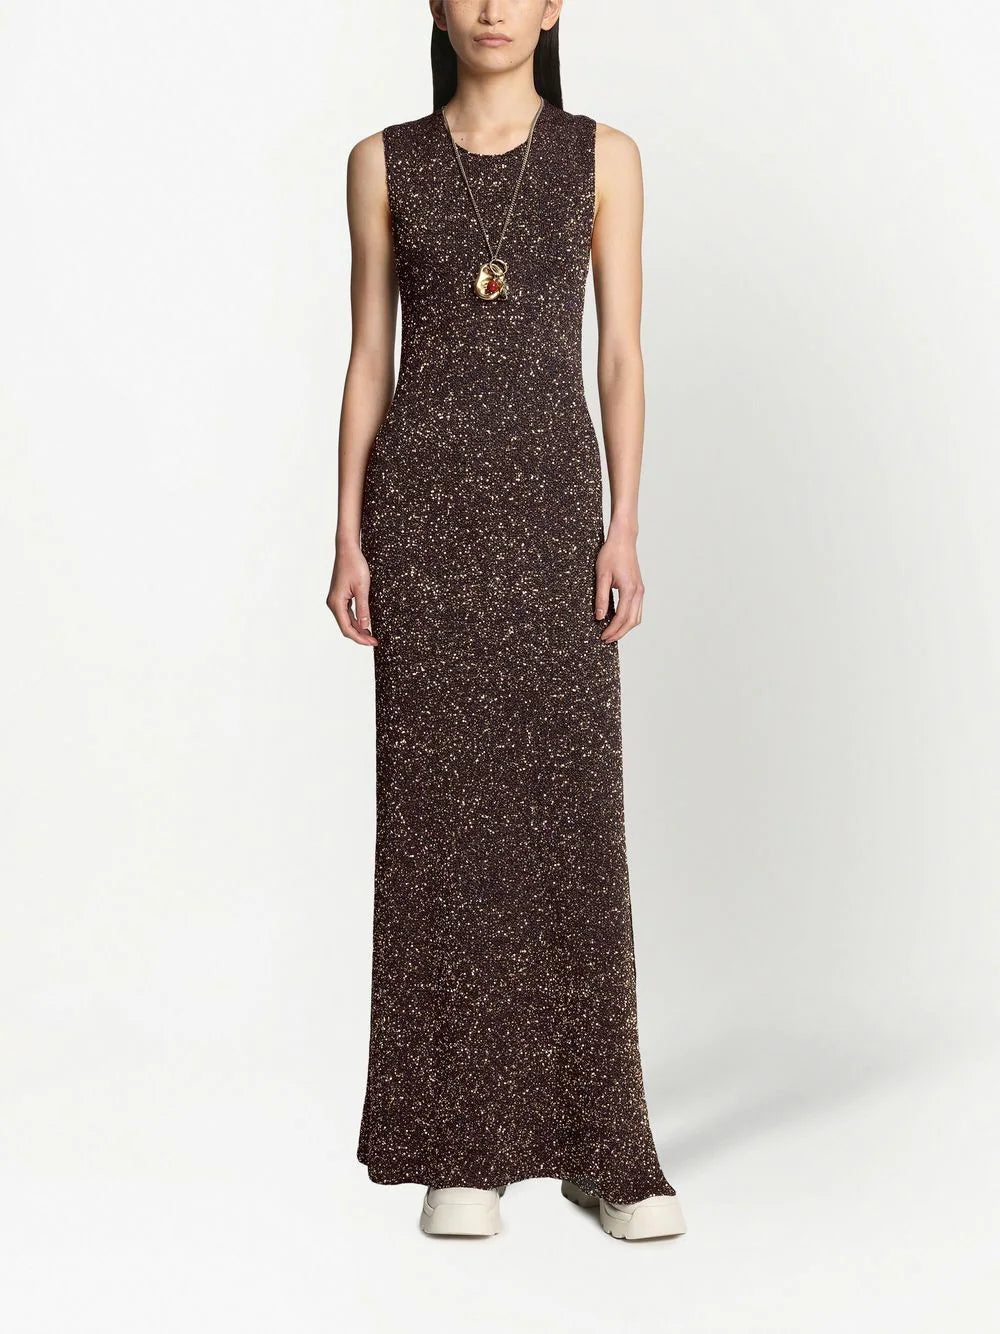 Sequin-embellished knitted dress, Dark Brown